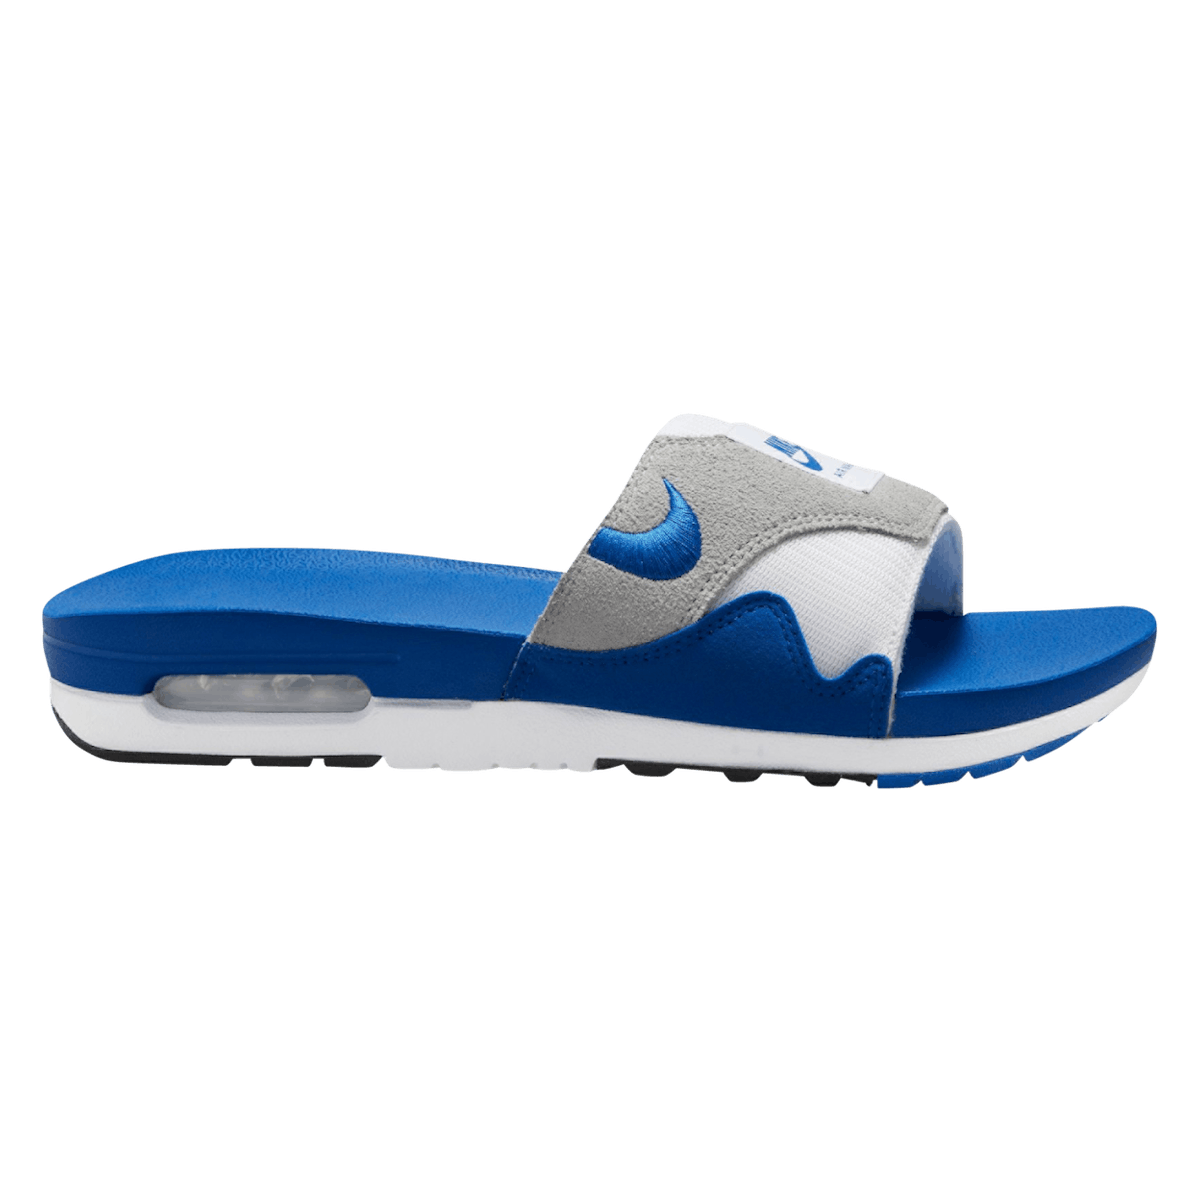 Nike Air Max 1 Slide "Royal Blue"